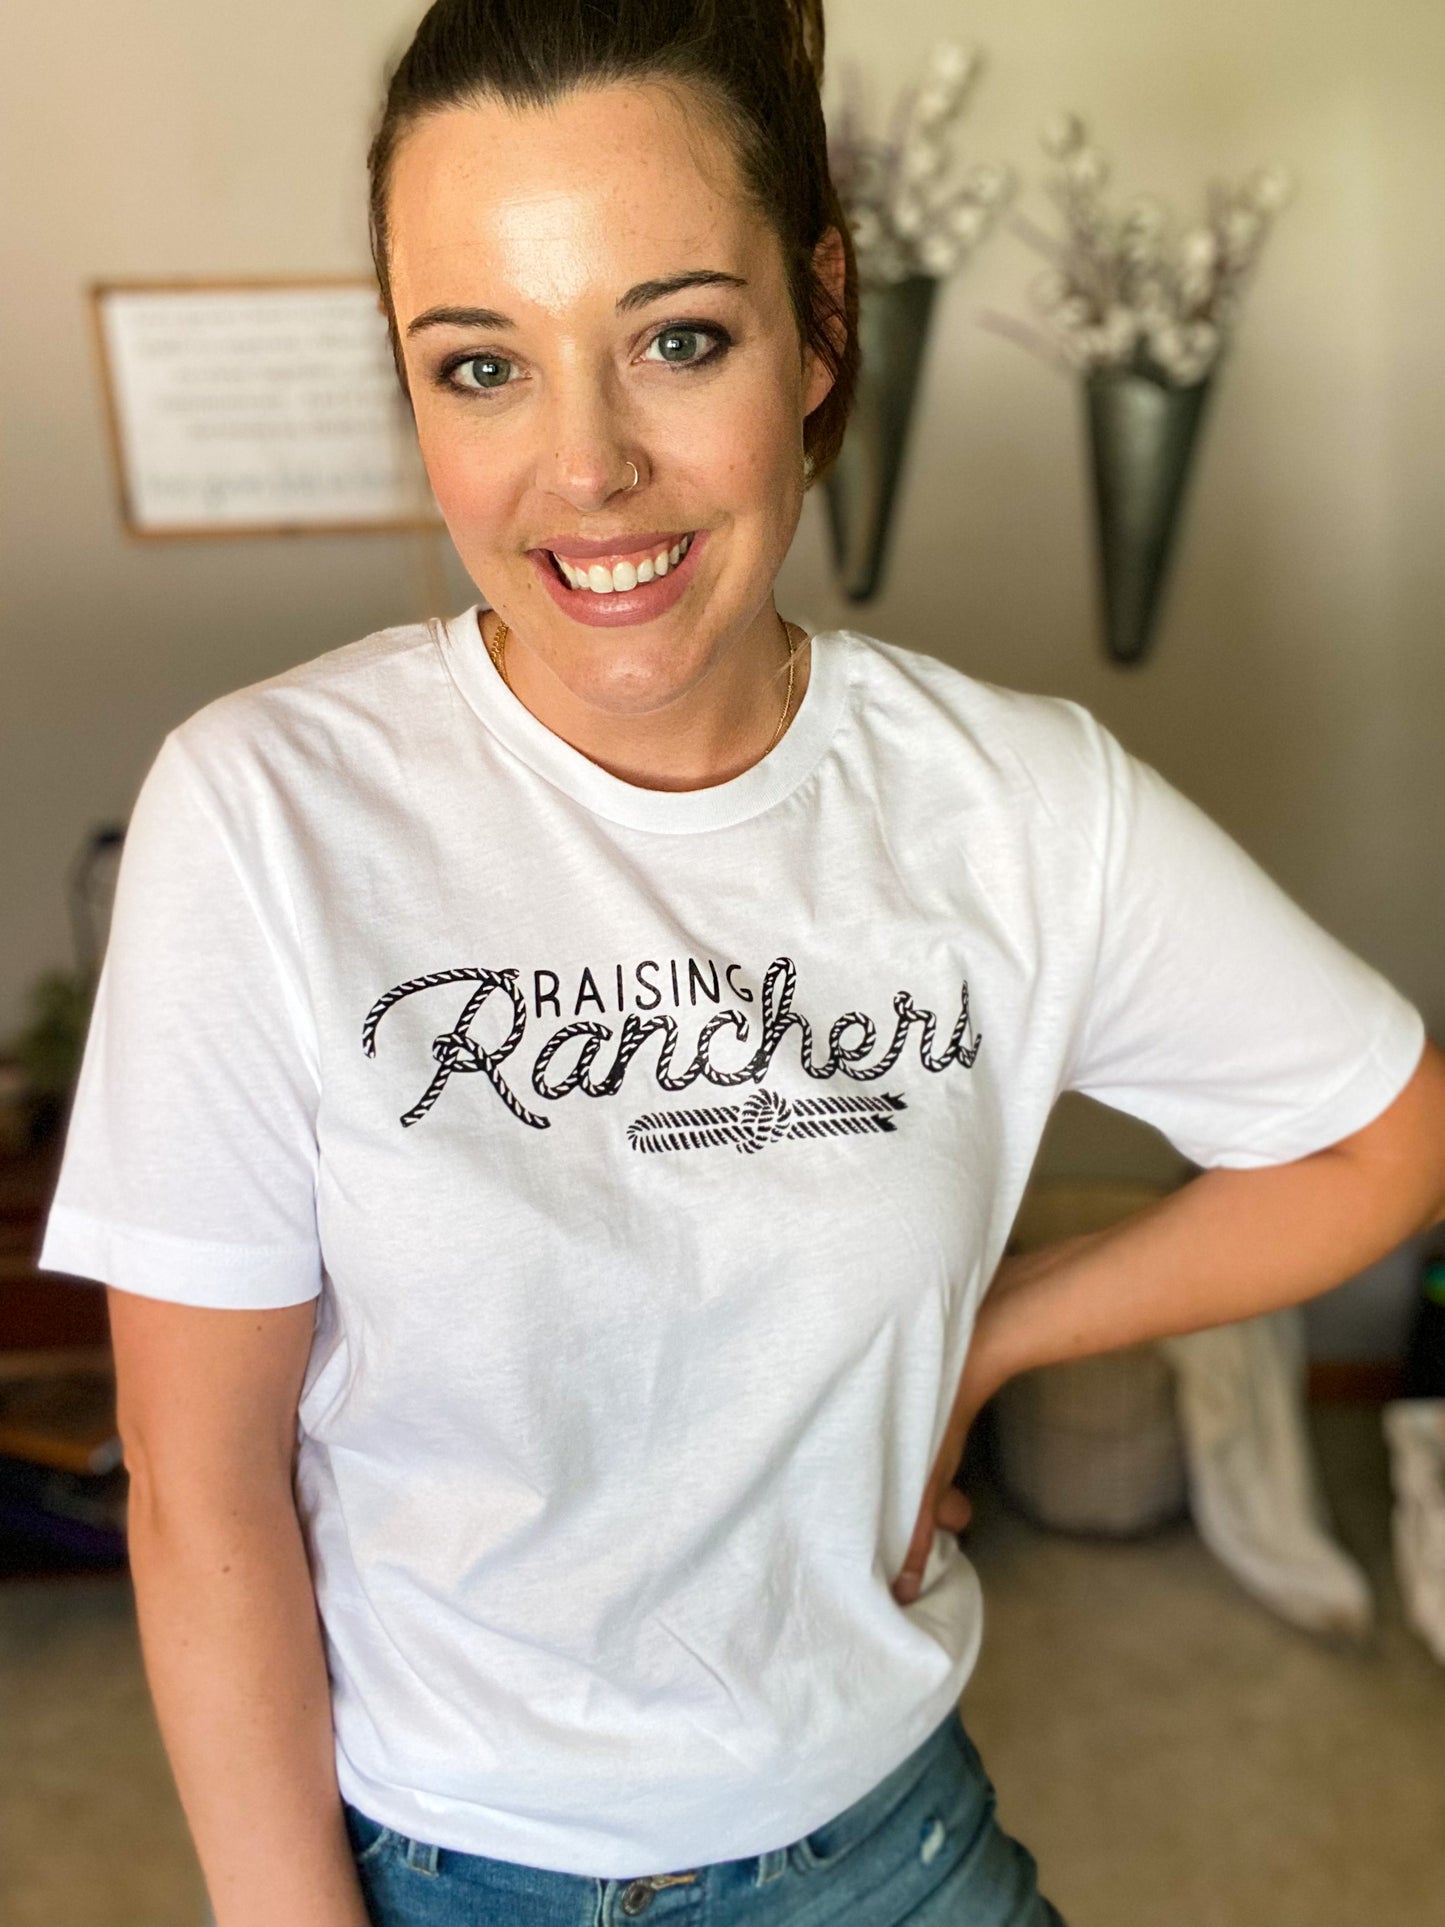 "Raising Ranchers" Graphic Tee